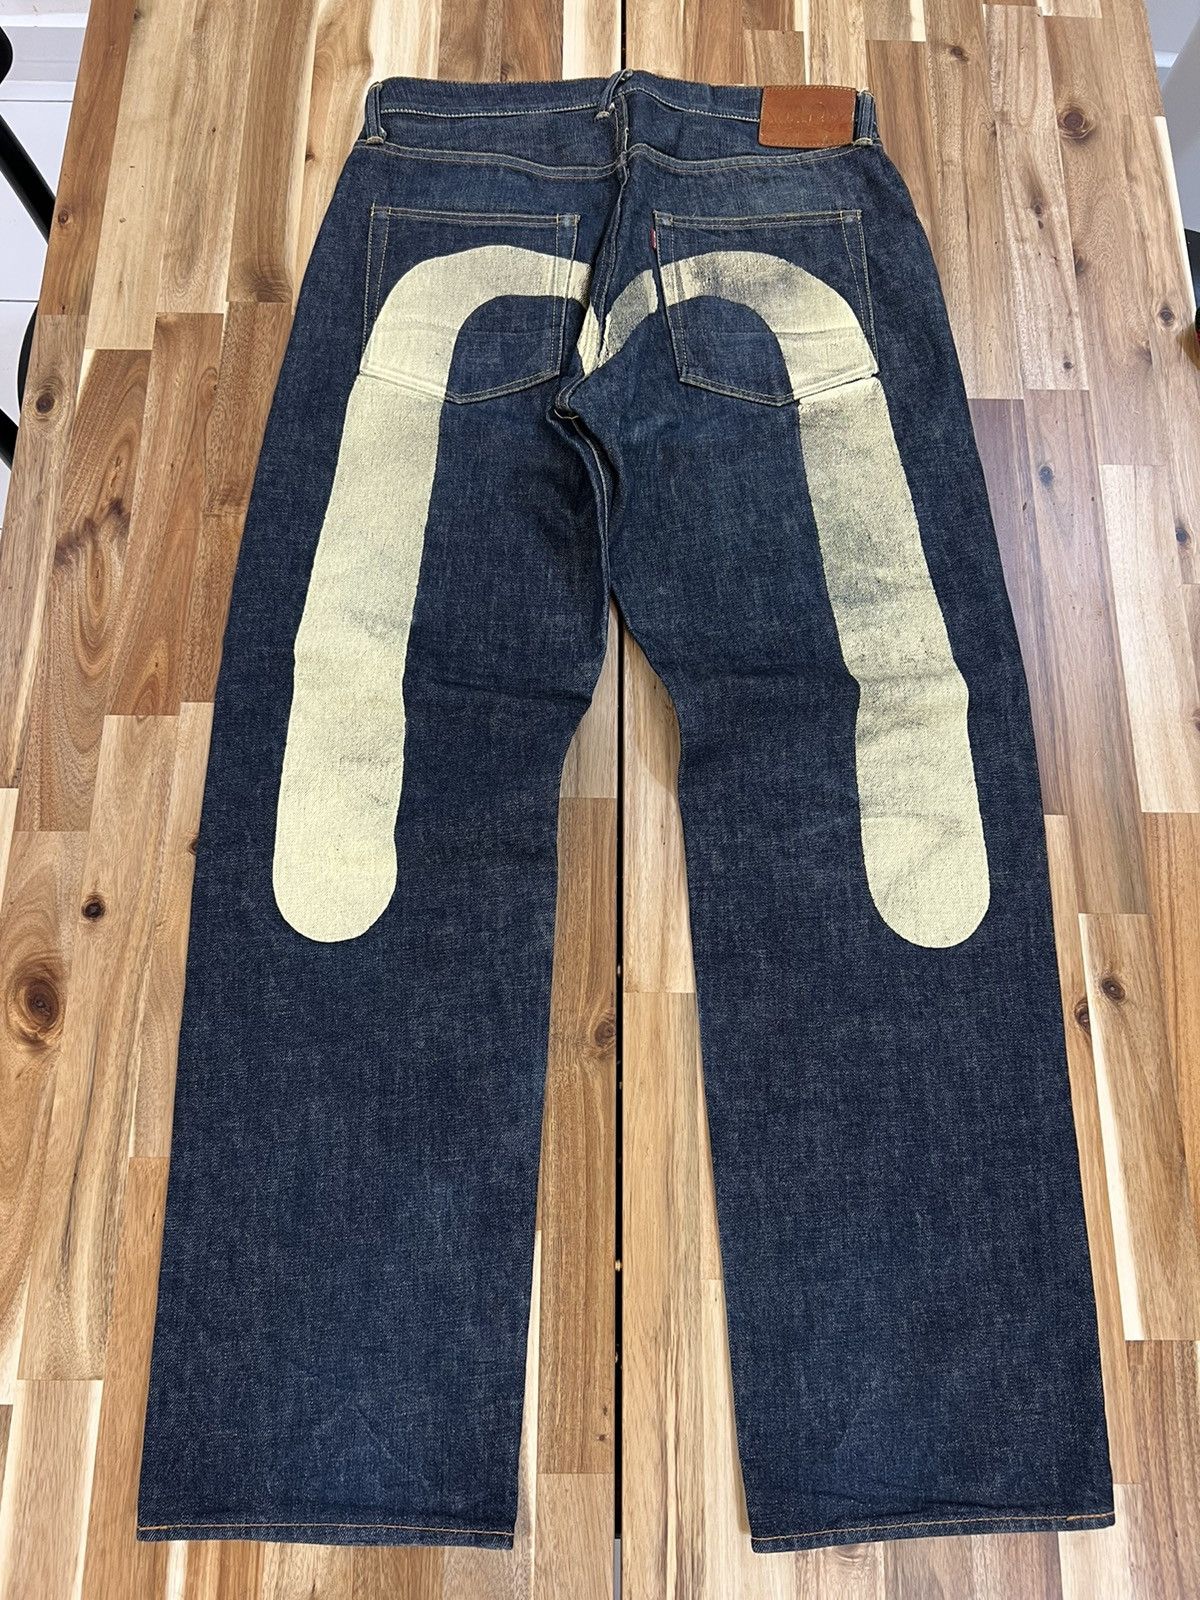 Vintage Evisu Jeans By Yamane Large Daicock Selvedge Travis Scott 